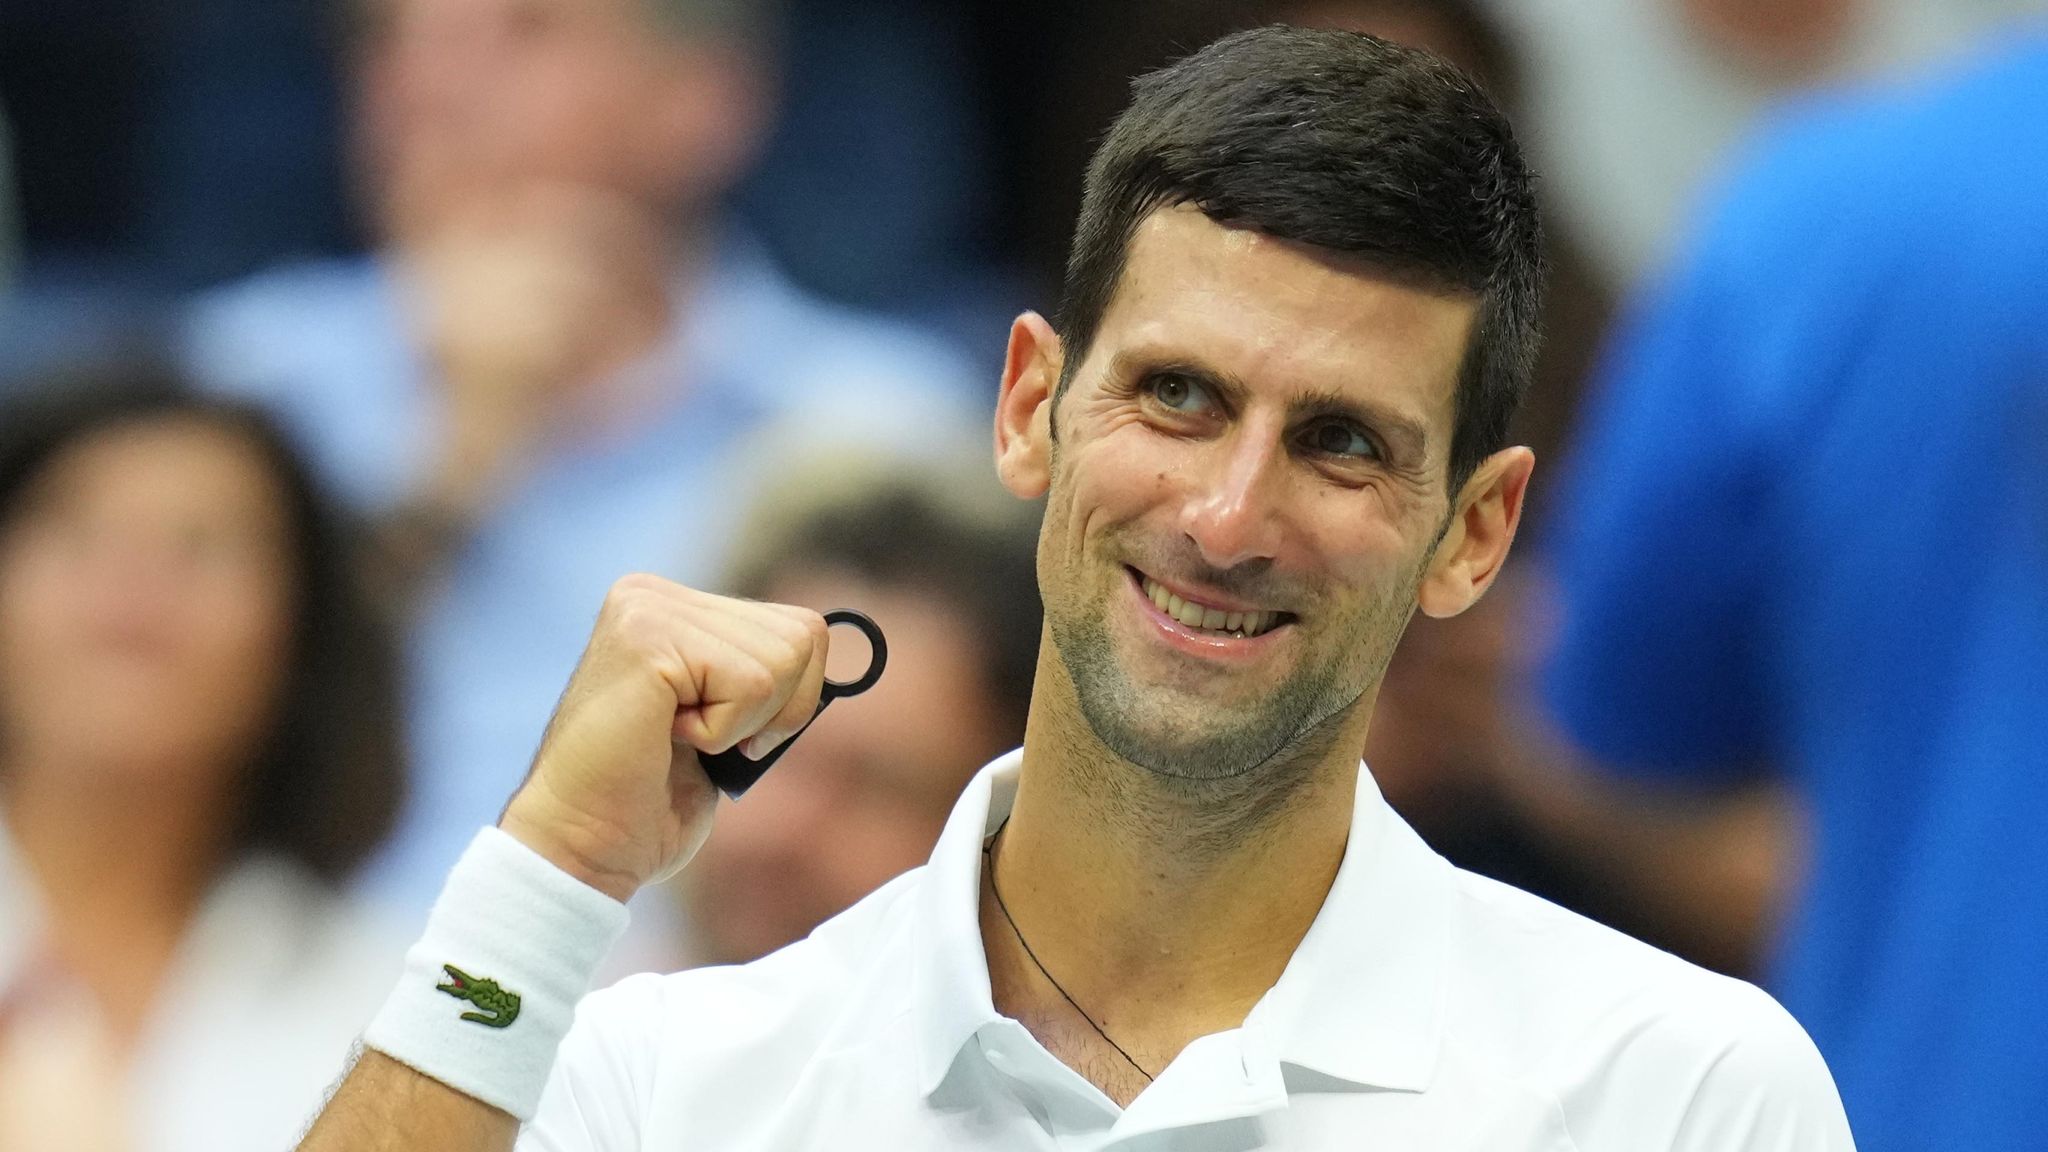 Novak Djokovic wins Australia visa appeal - government could still deport him | News | Sky